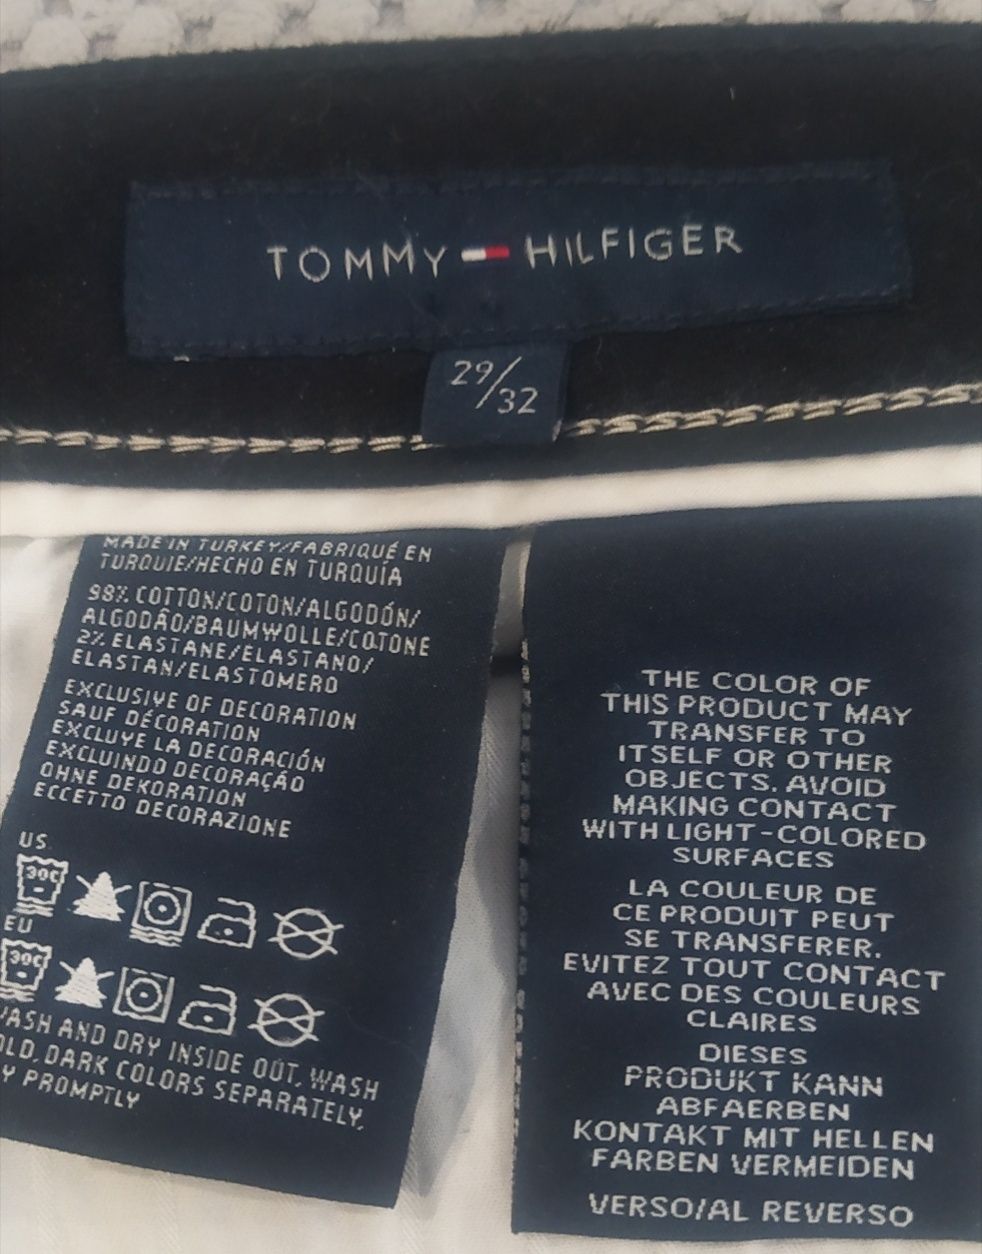 Женские джинсы Tommy Hilfiger